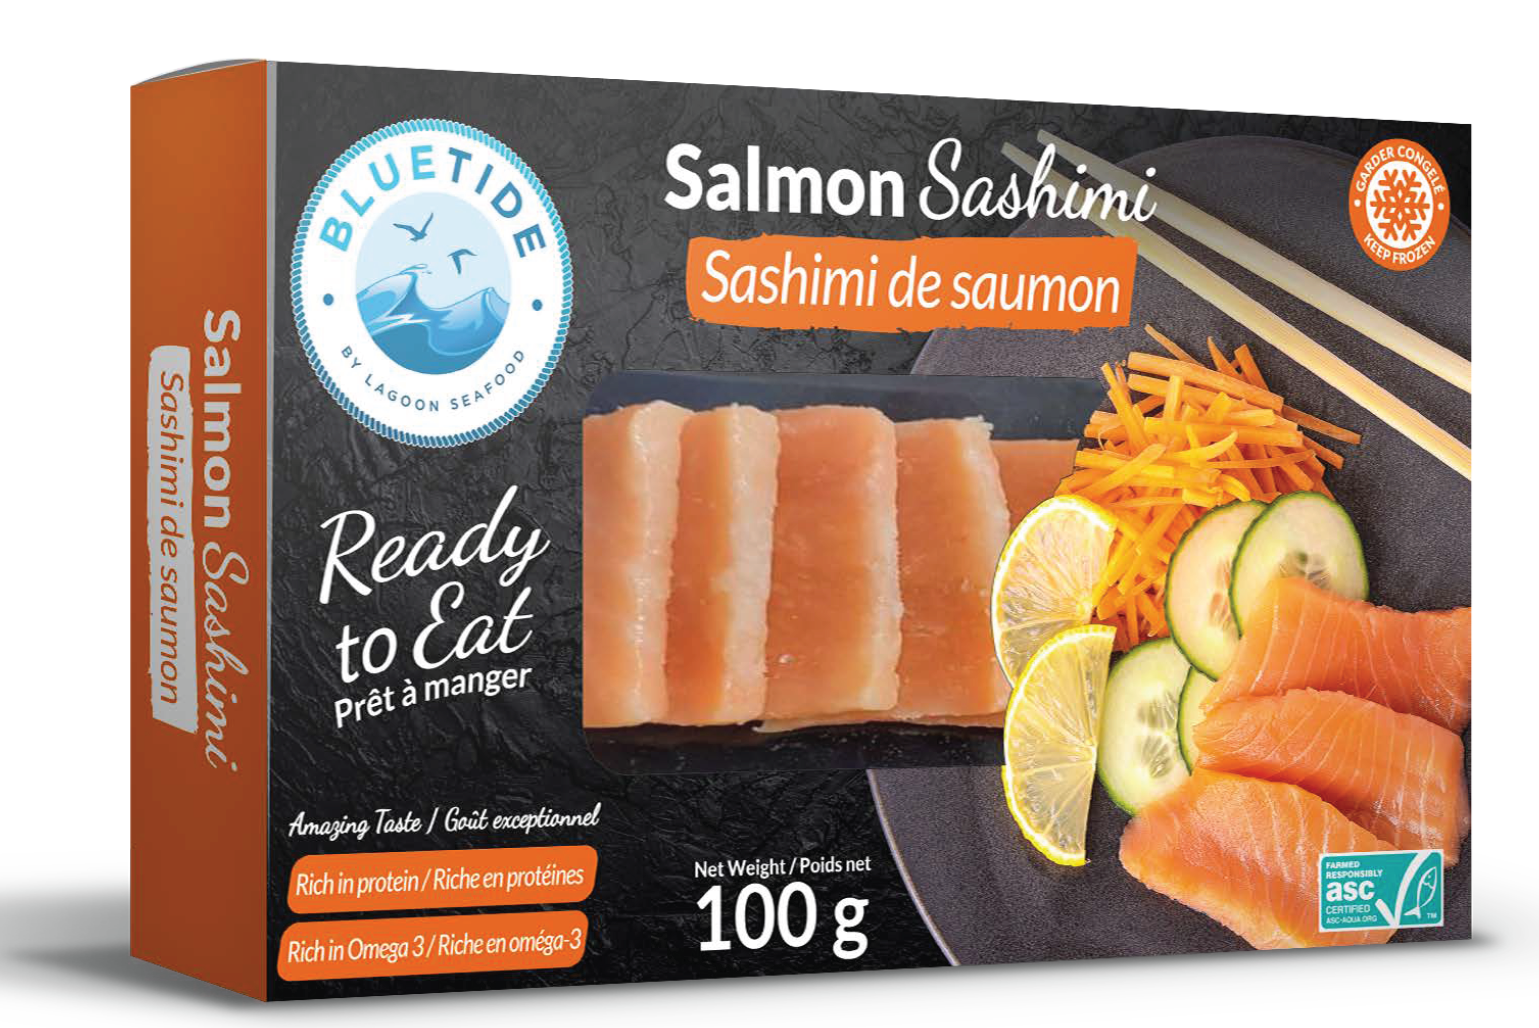 Atlantic Salmon Sashimi 100g – skin pack